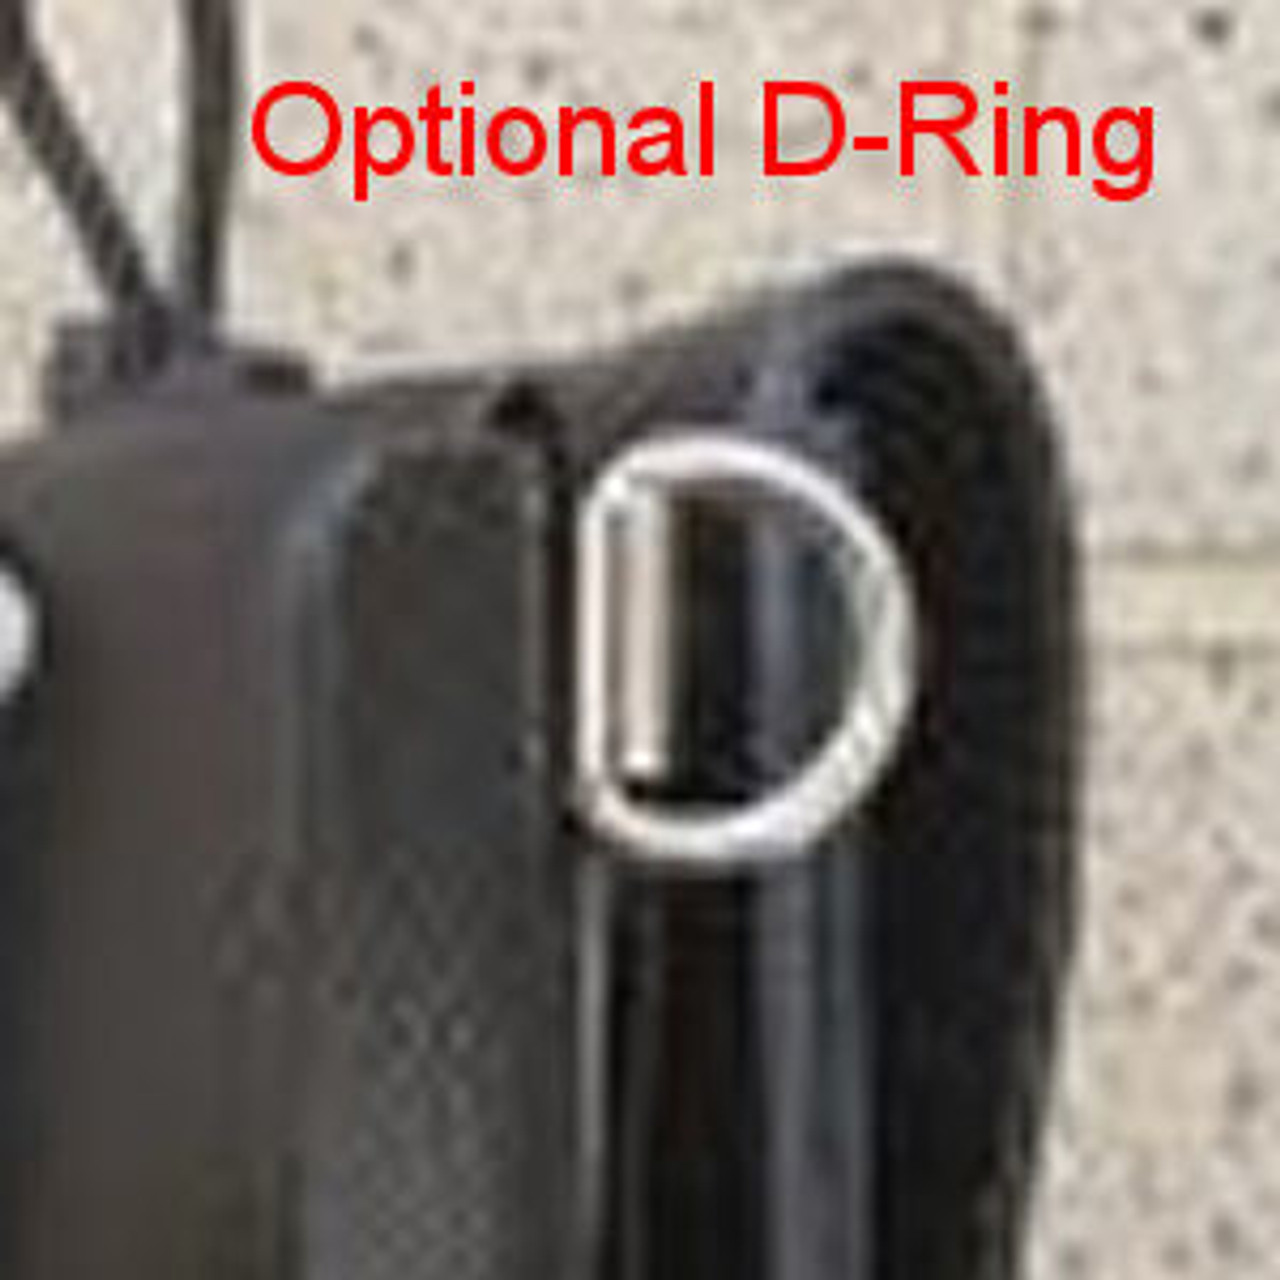 M/A-Com P7370 Custom Radio Case With Optional D-Ring